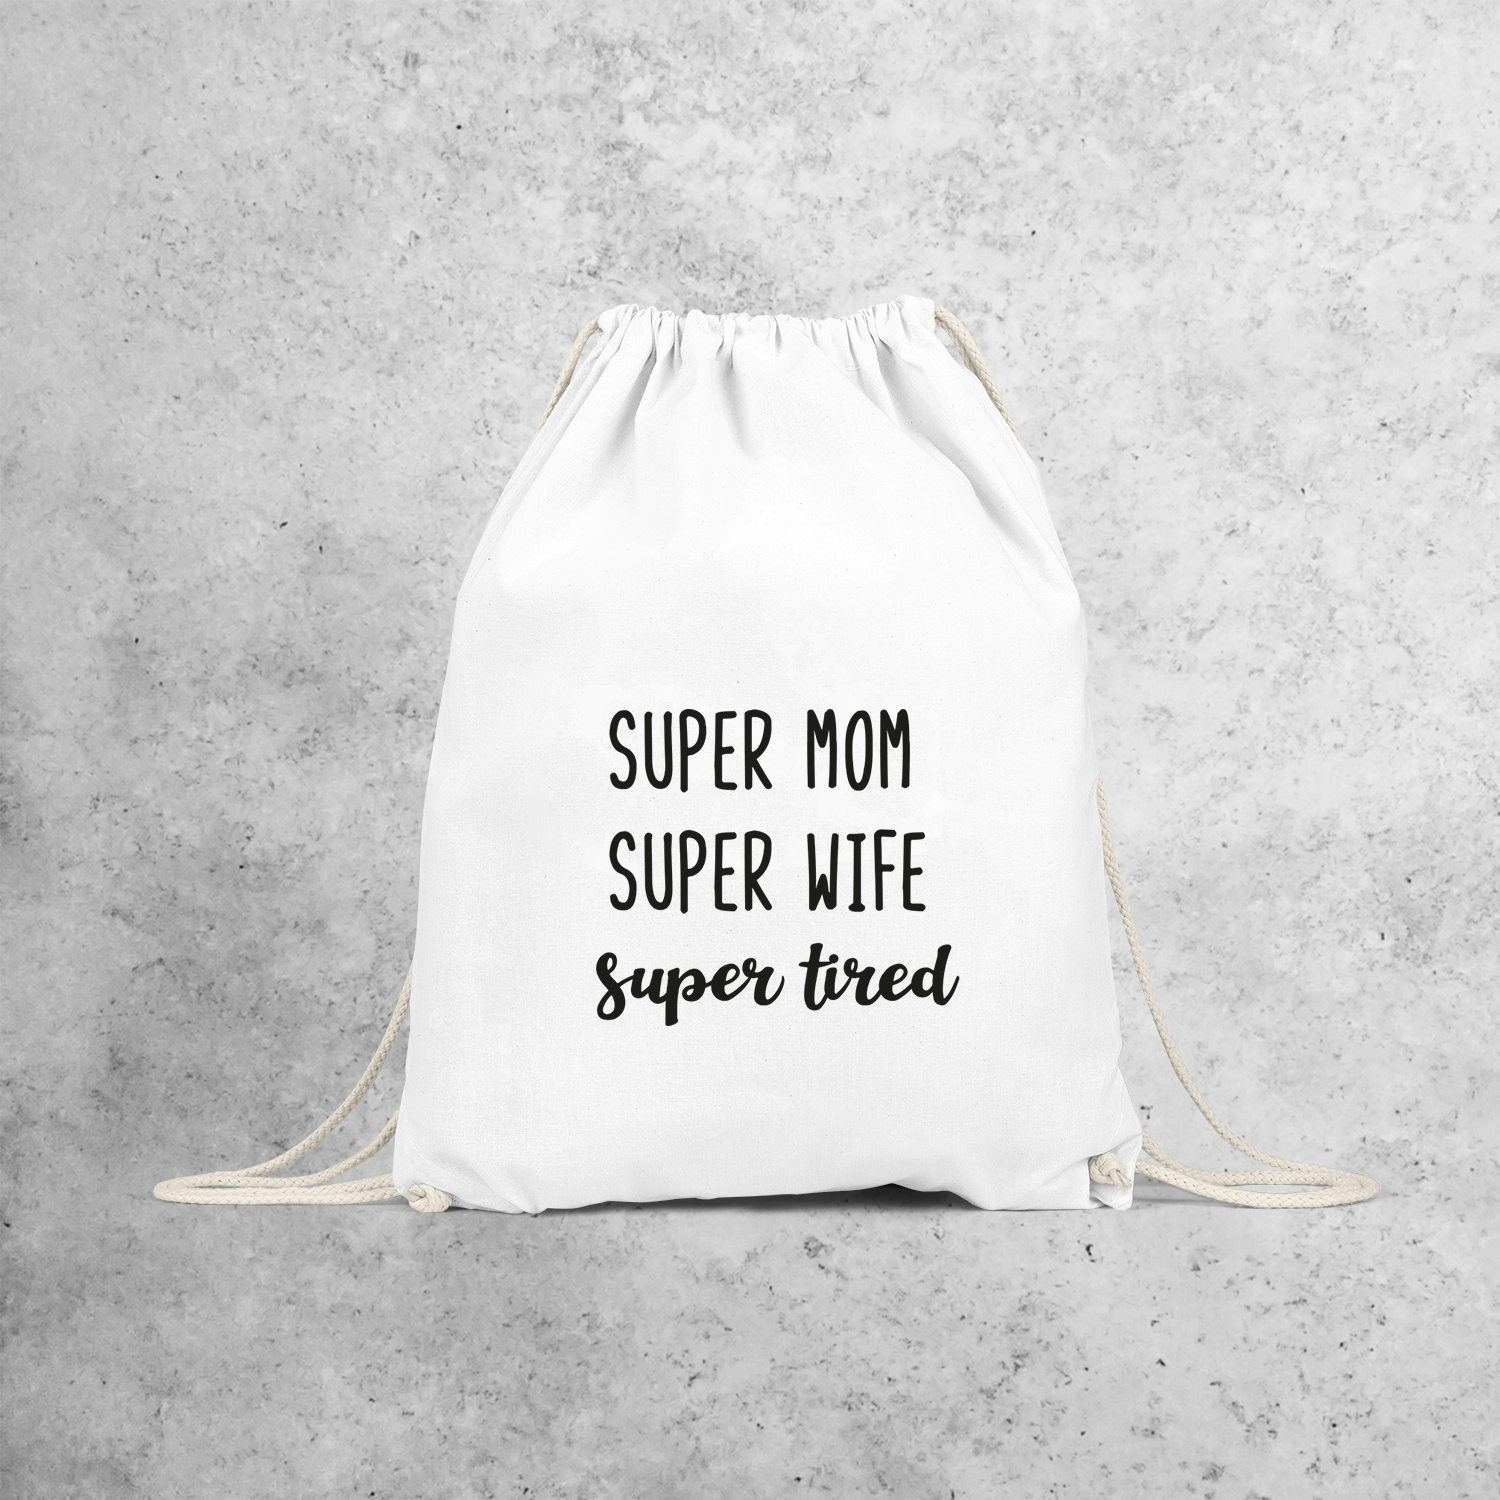 'Super mom. Super wife. Super tired' backpack